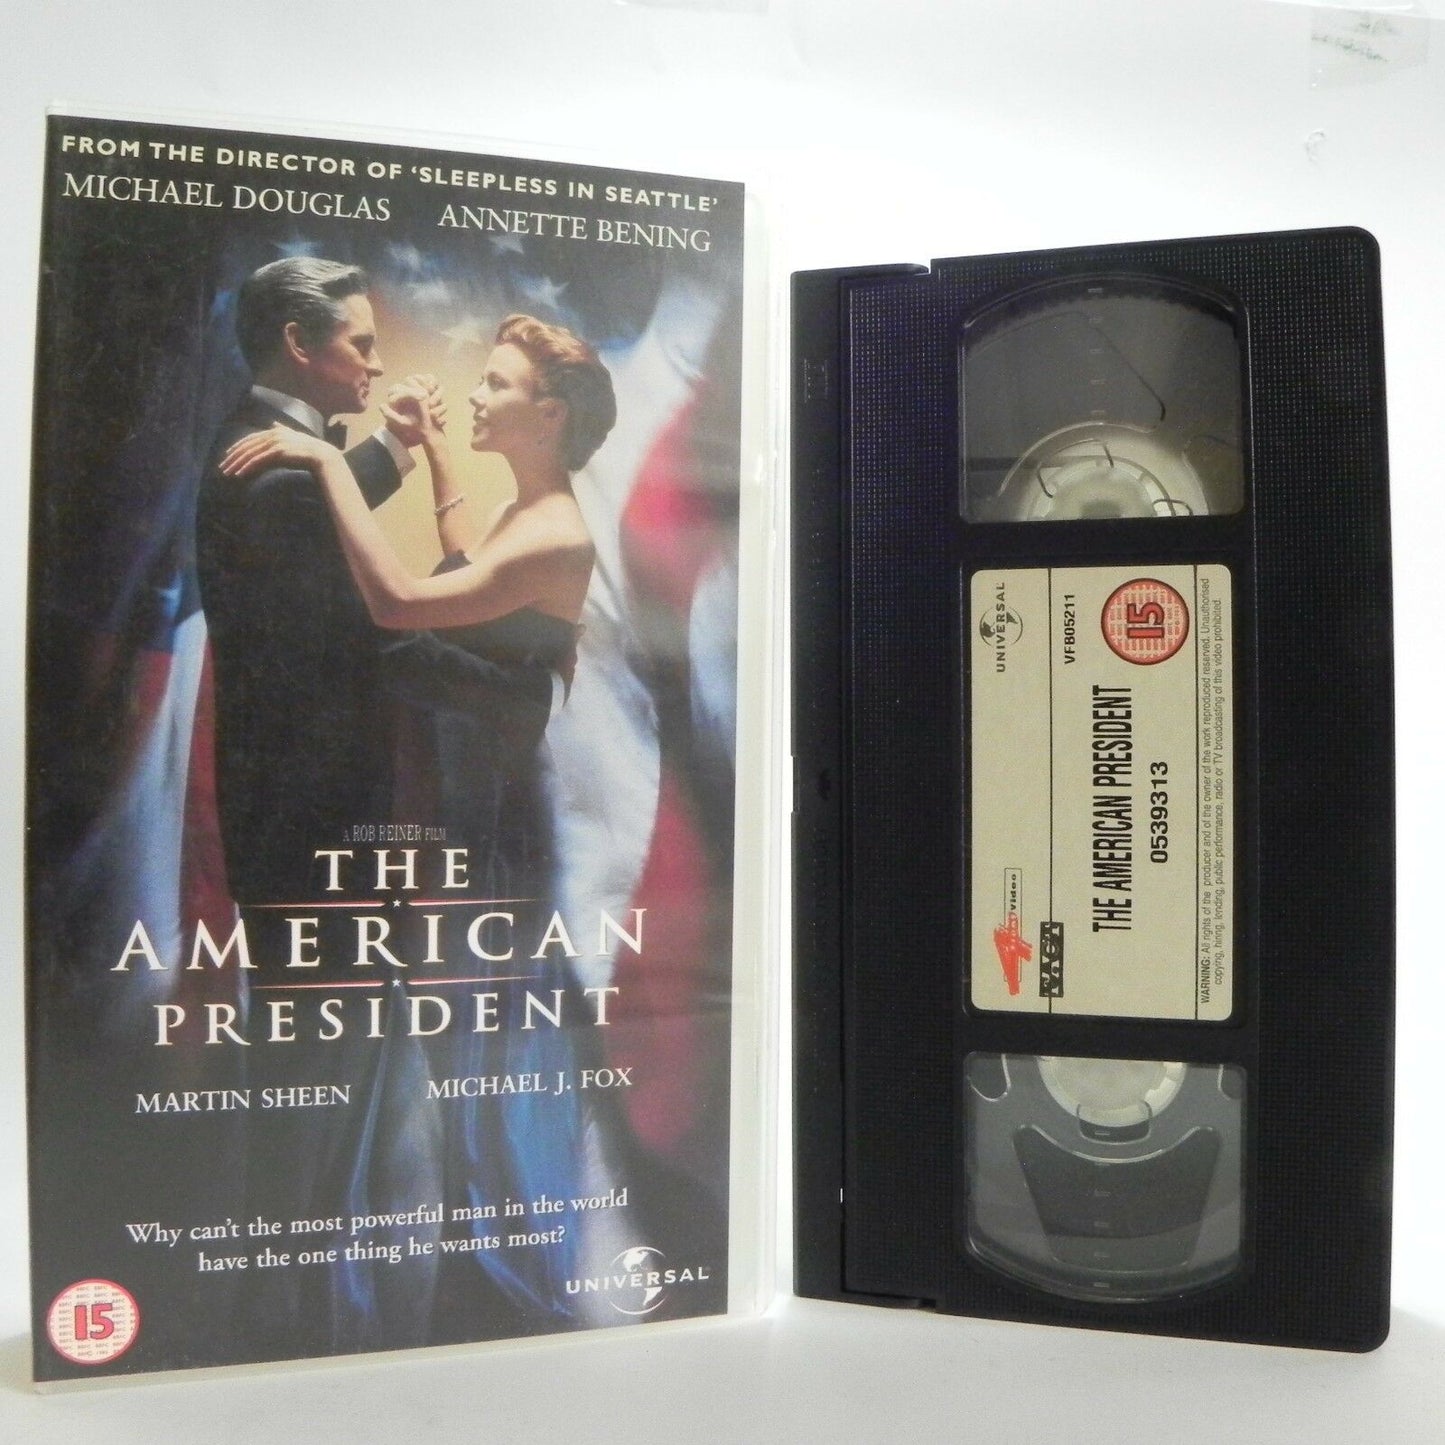 The American President: Universal (1995) - Romance/Drama - M.Douglas - VHS-